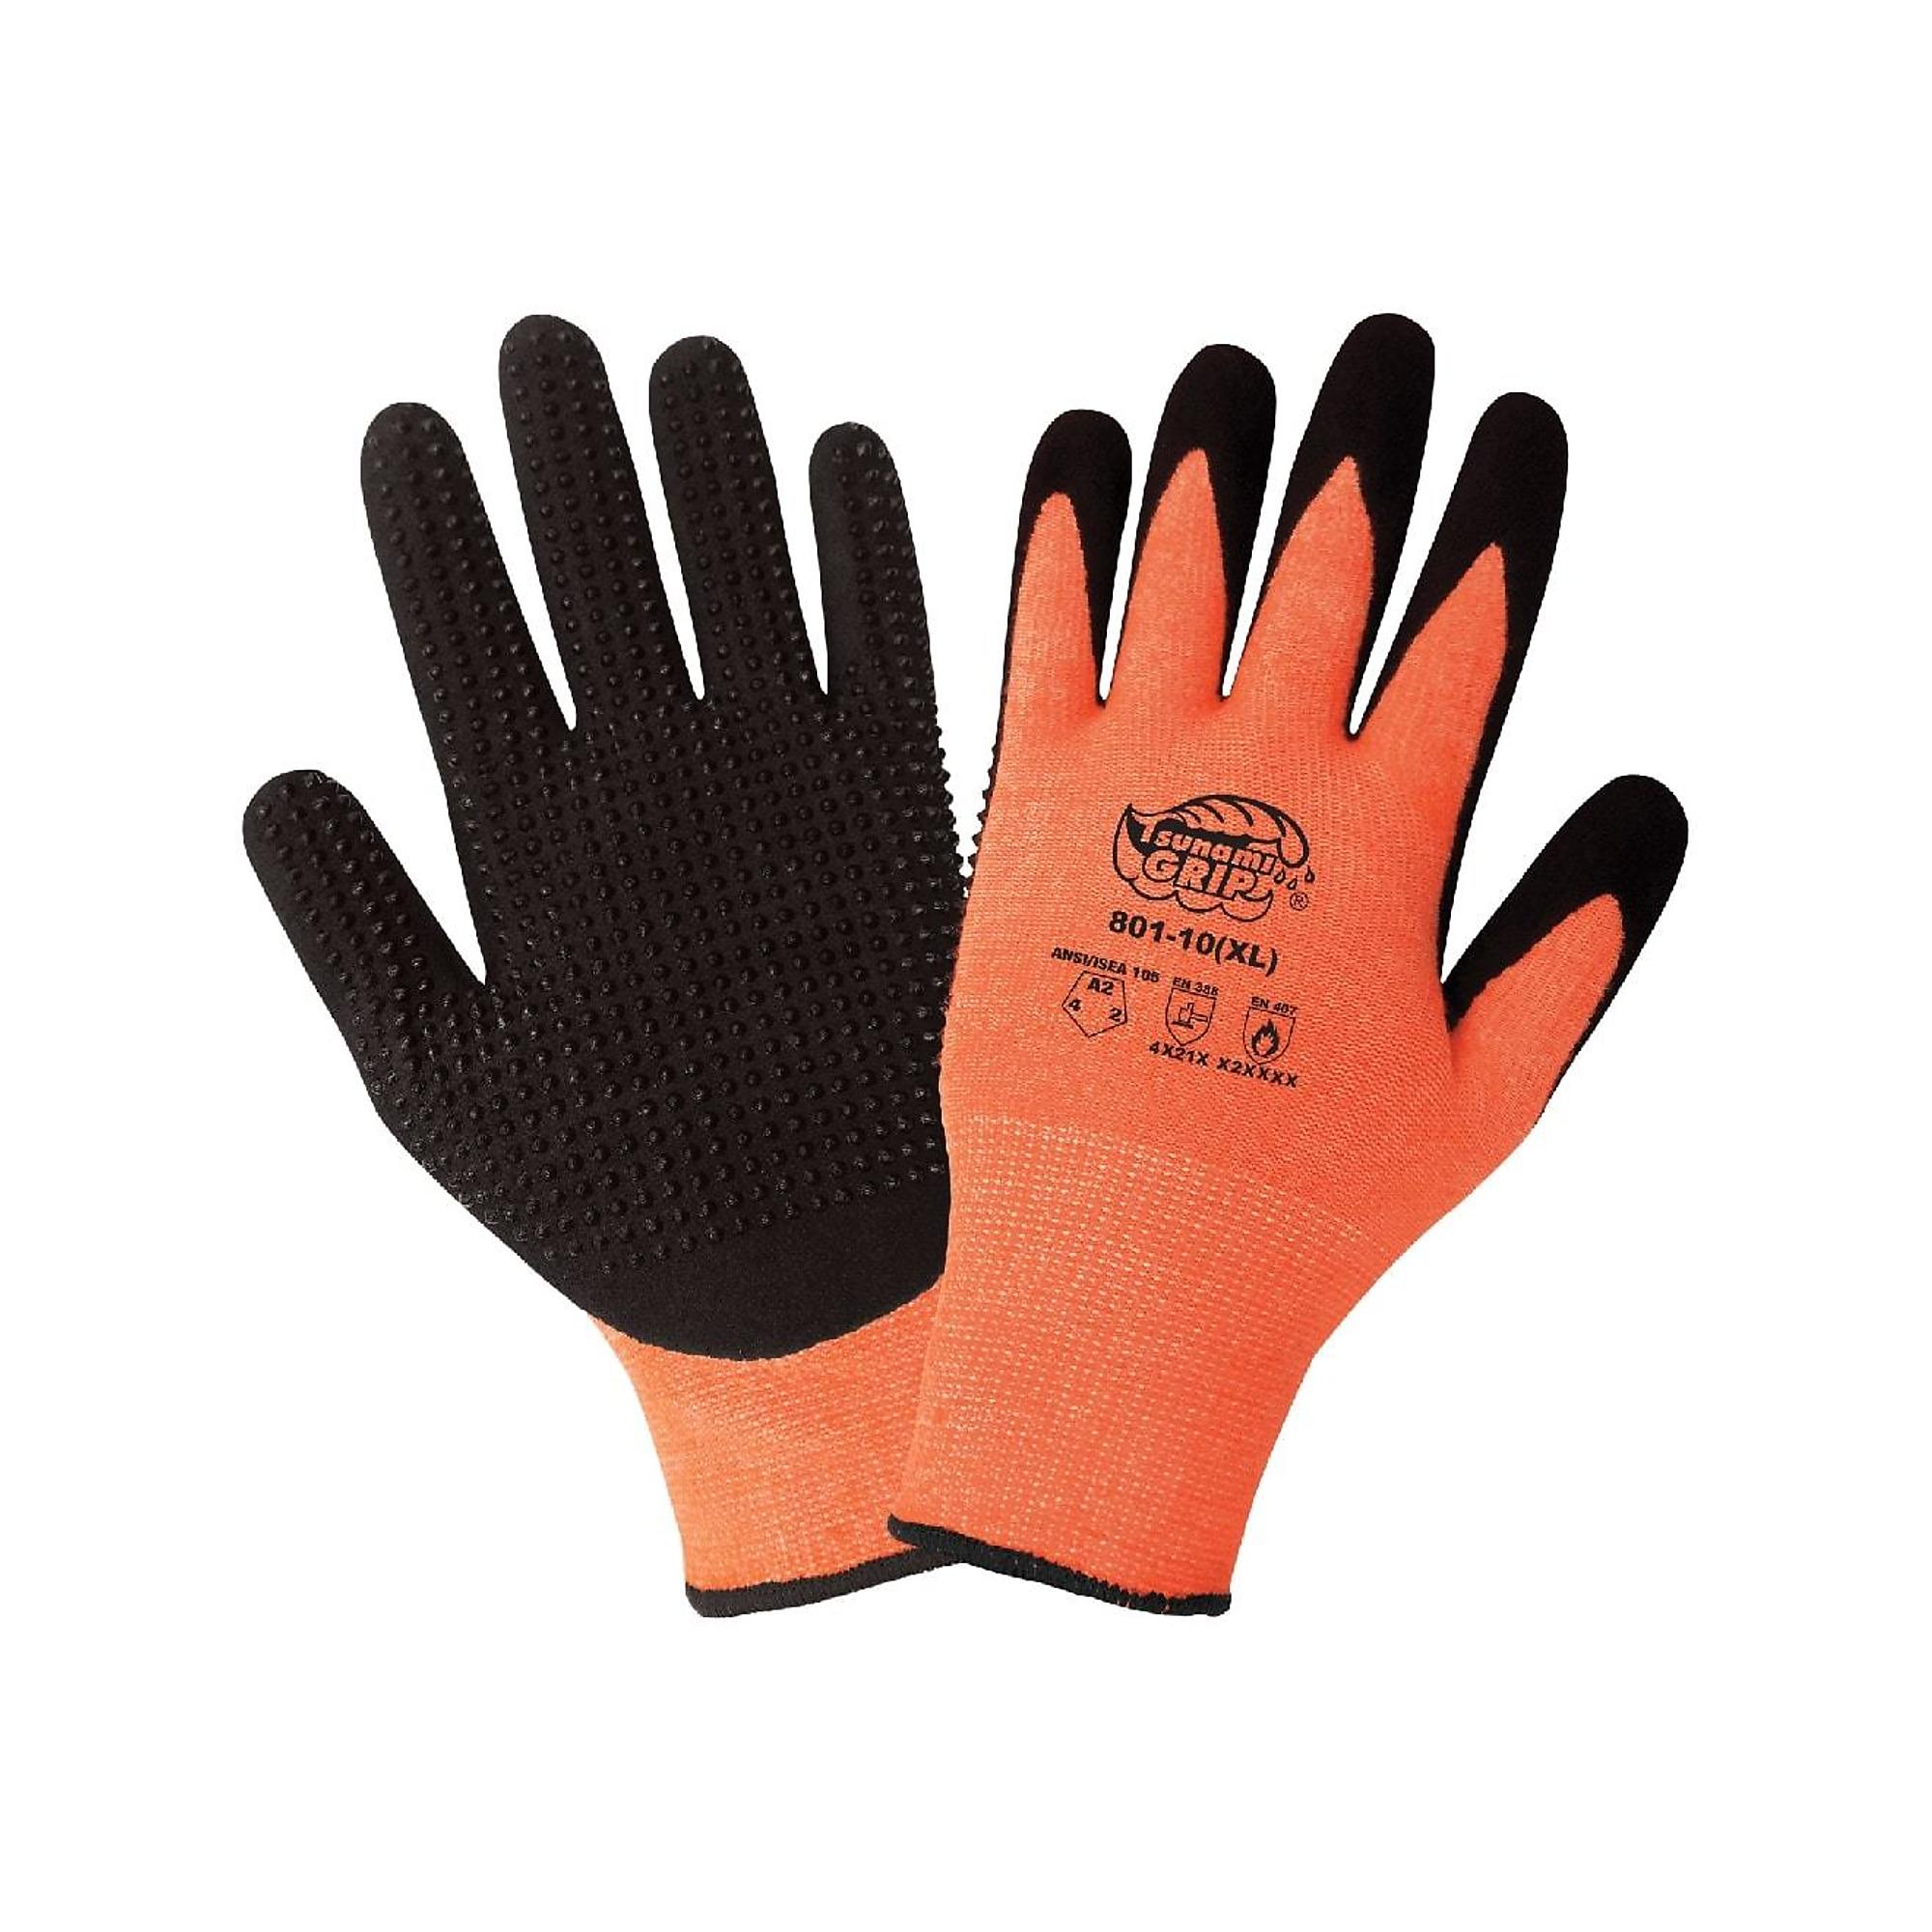 Global Glove Tsunami Grip , Orange, Heat Resist, Dotted, Cut Resist A2 Gloves - 12 Pairs, Size XL, Color Orange/Black, Included (qty.) 12 Model 801-10